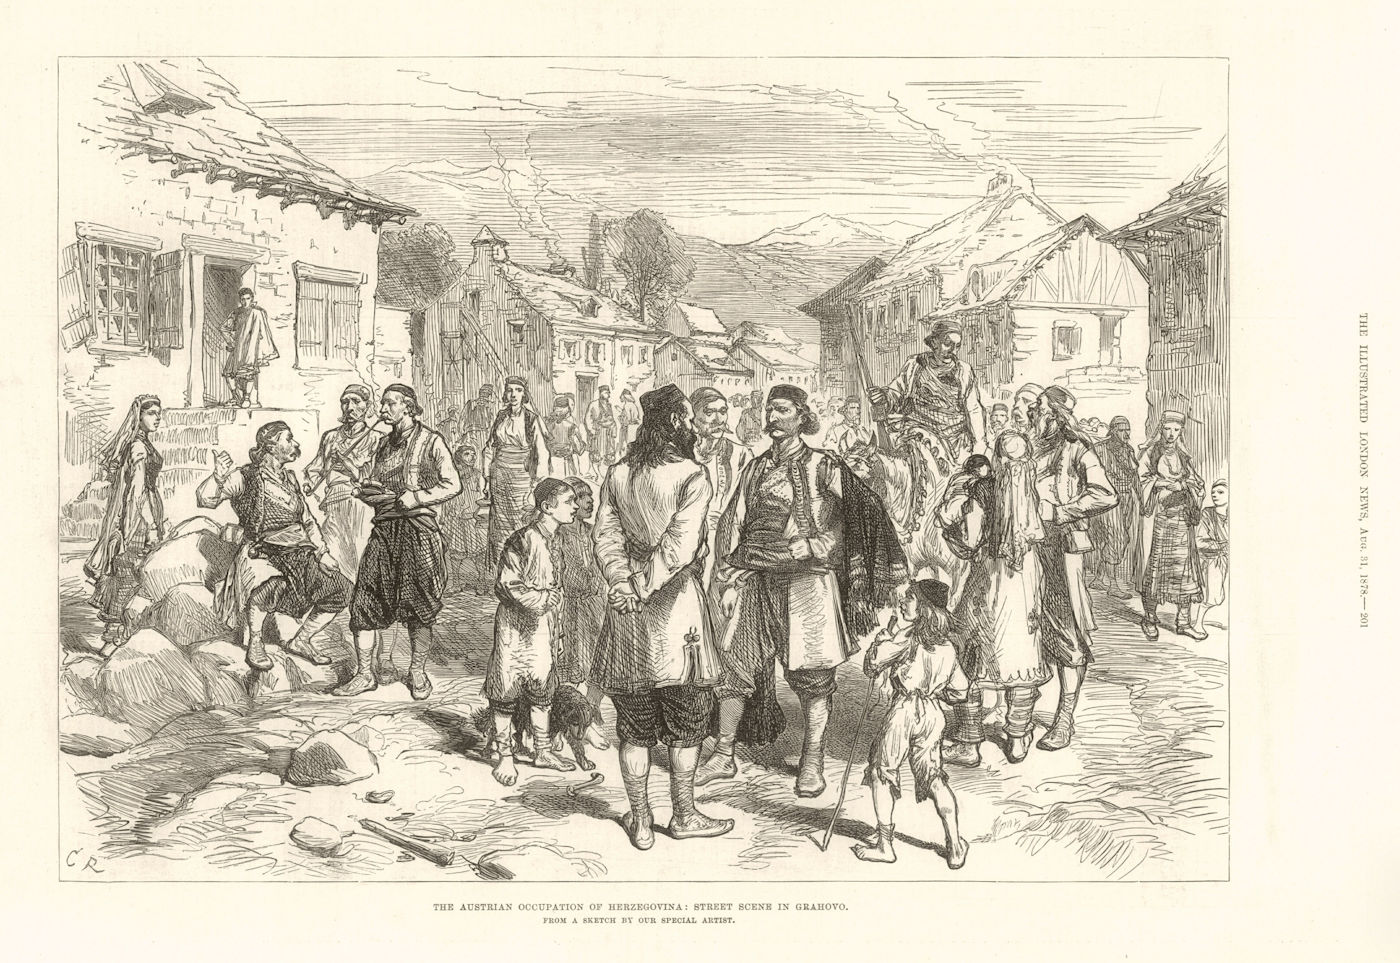 The Austrian Occupation of Herzegovina: Grahovo street scene. Bosnia 1878